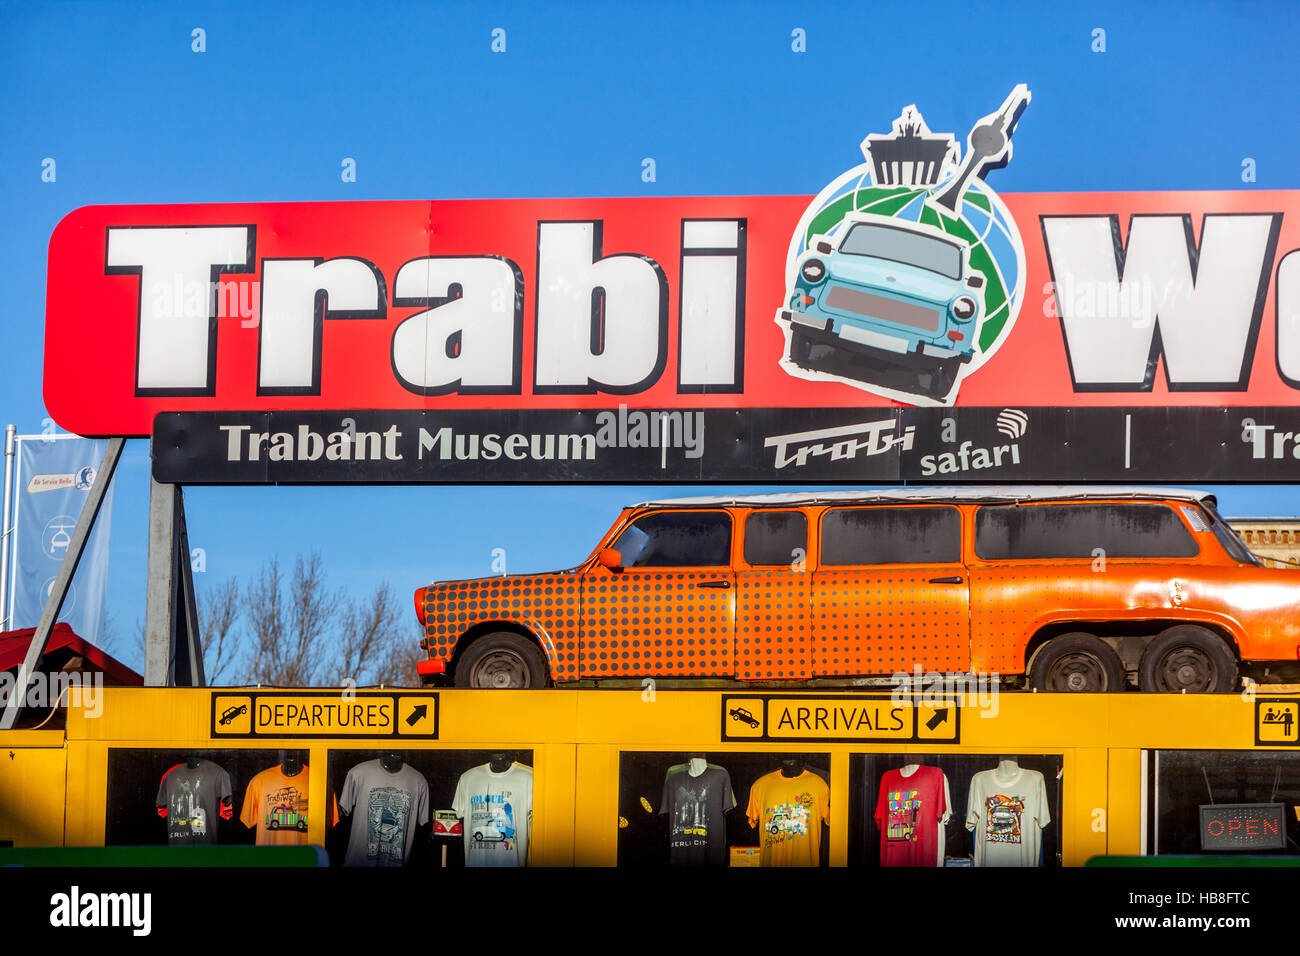 Trabi Museum, Trabant car museum, Friedrichstadt, Berlin, Germany Stock Photo